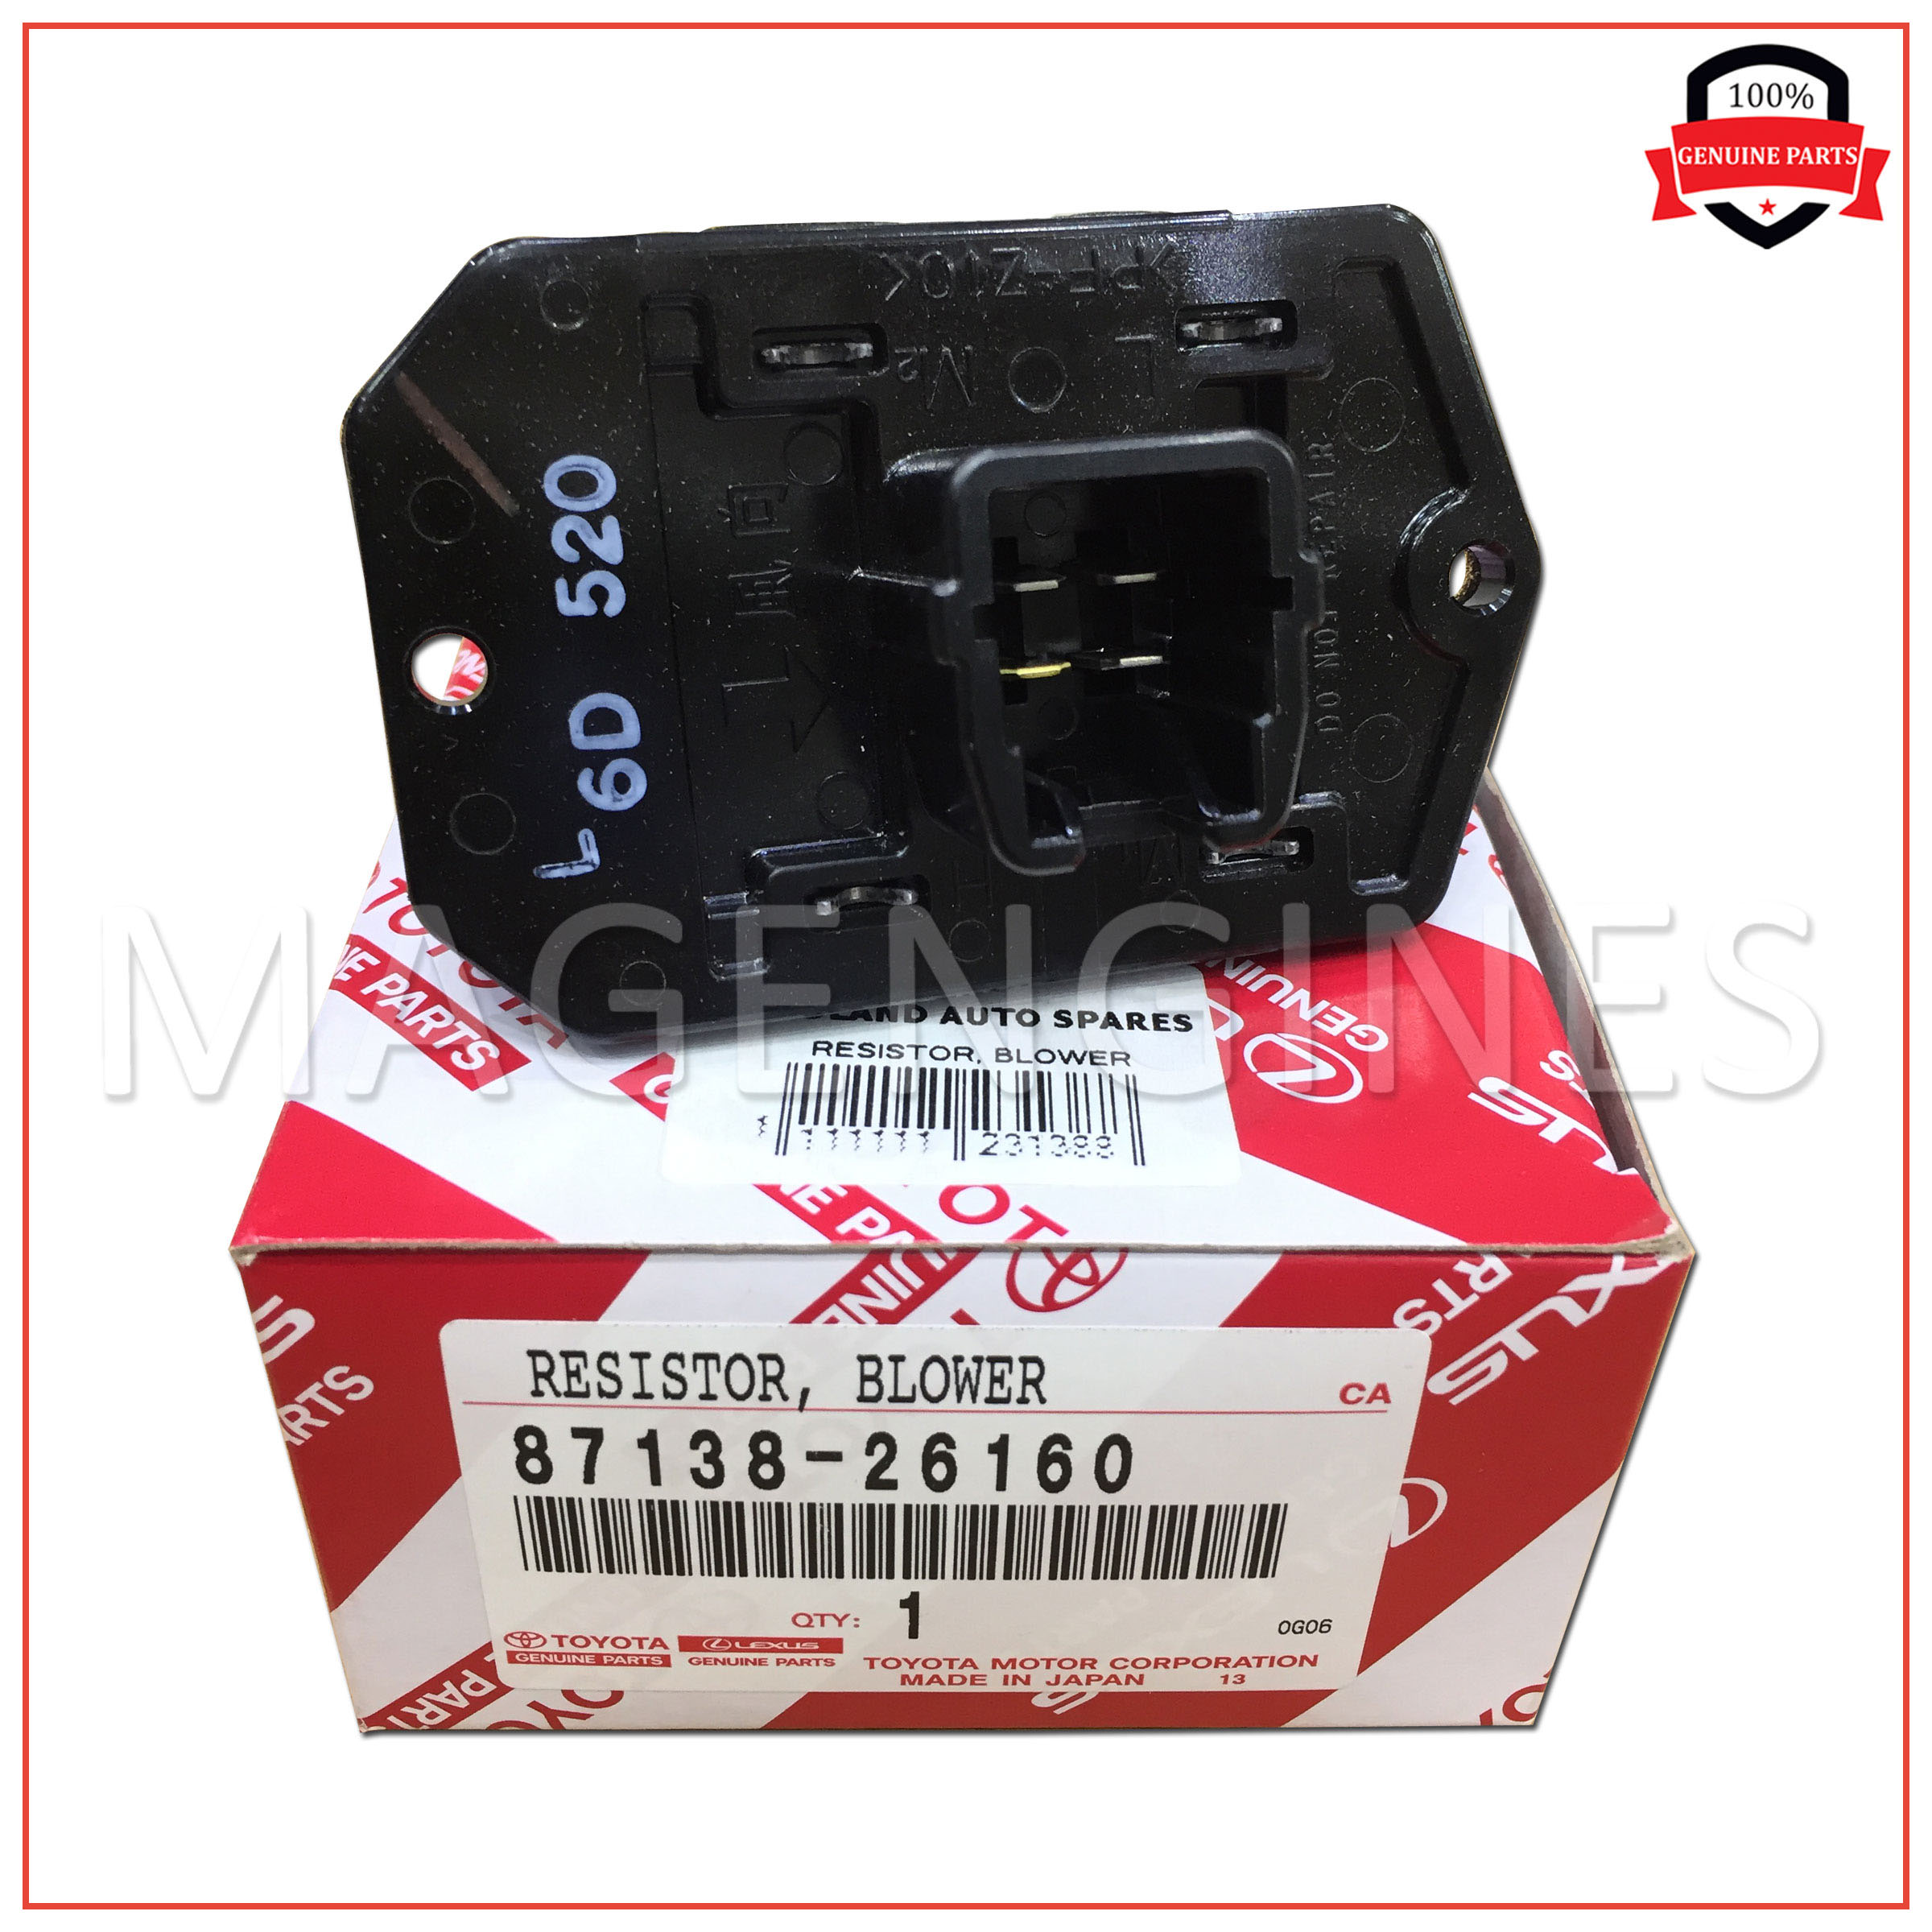 For Scion tC xB Toyota Corolla RAV4 Blower Motor Resistor Genuine 87138-26160